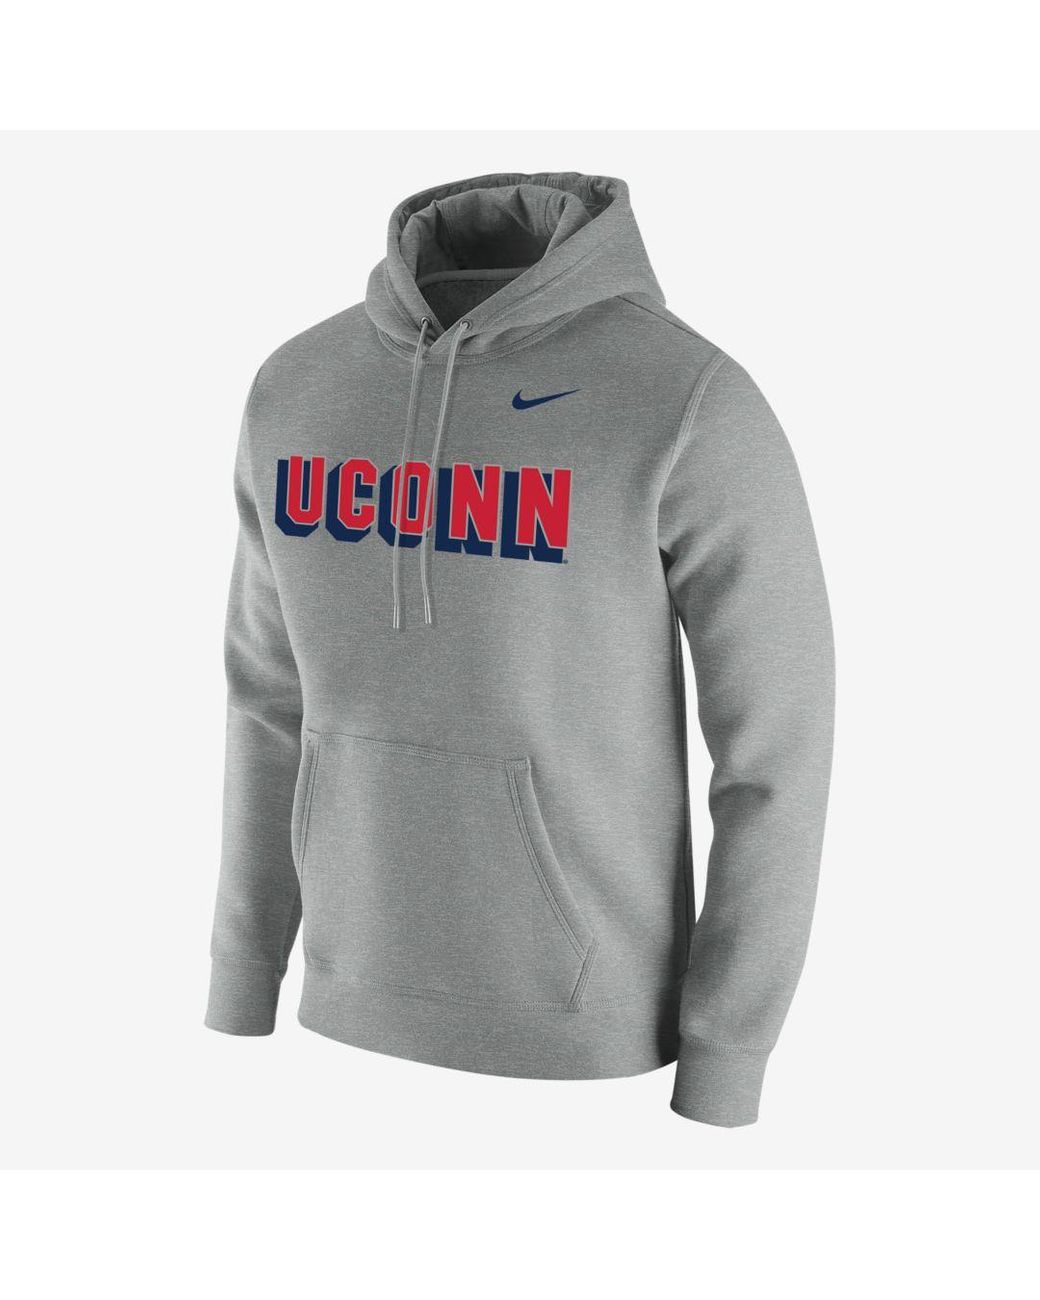 Nike College Club Fleece (uconn) Hoodie (grey) - Clearance Sale in Gray ...